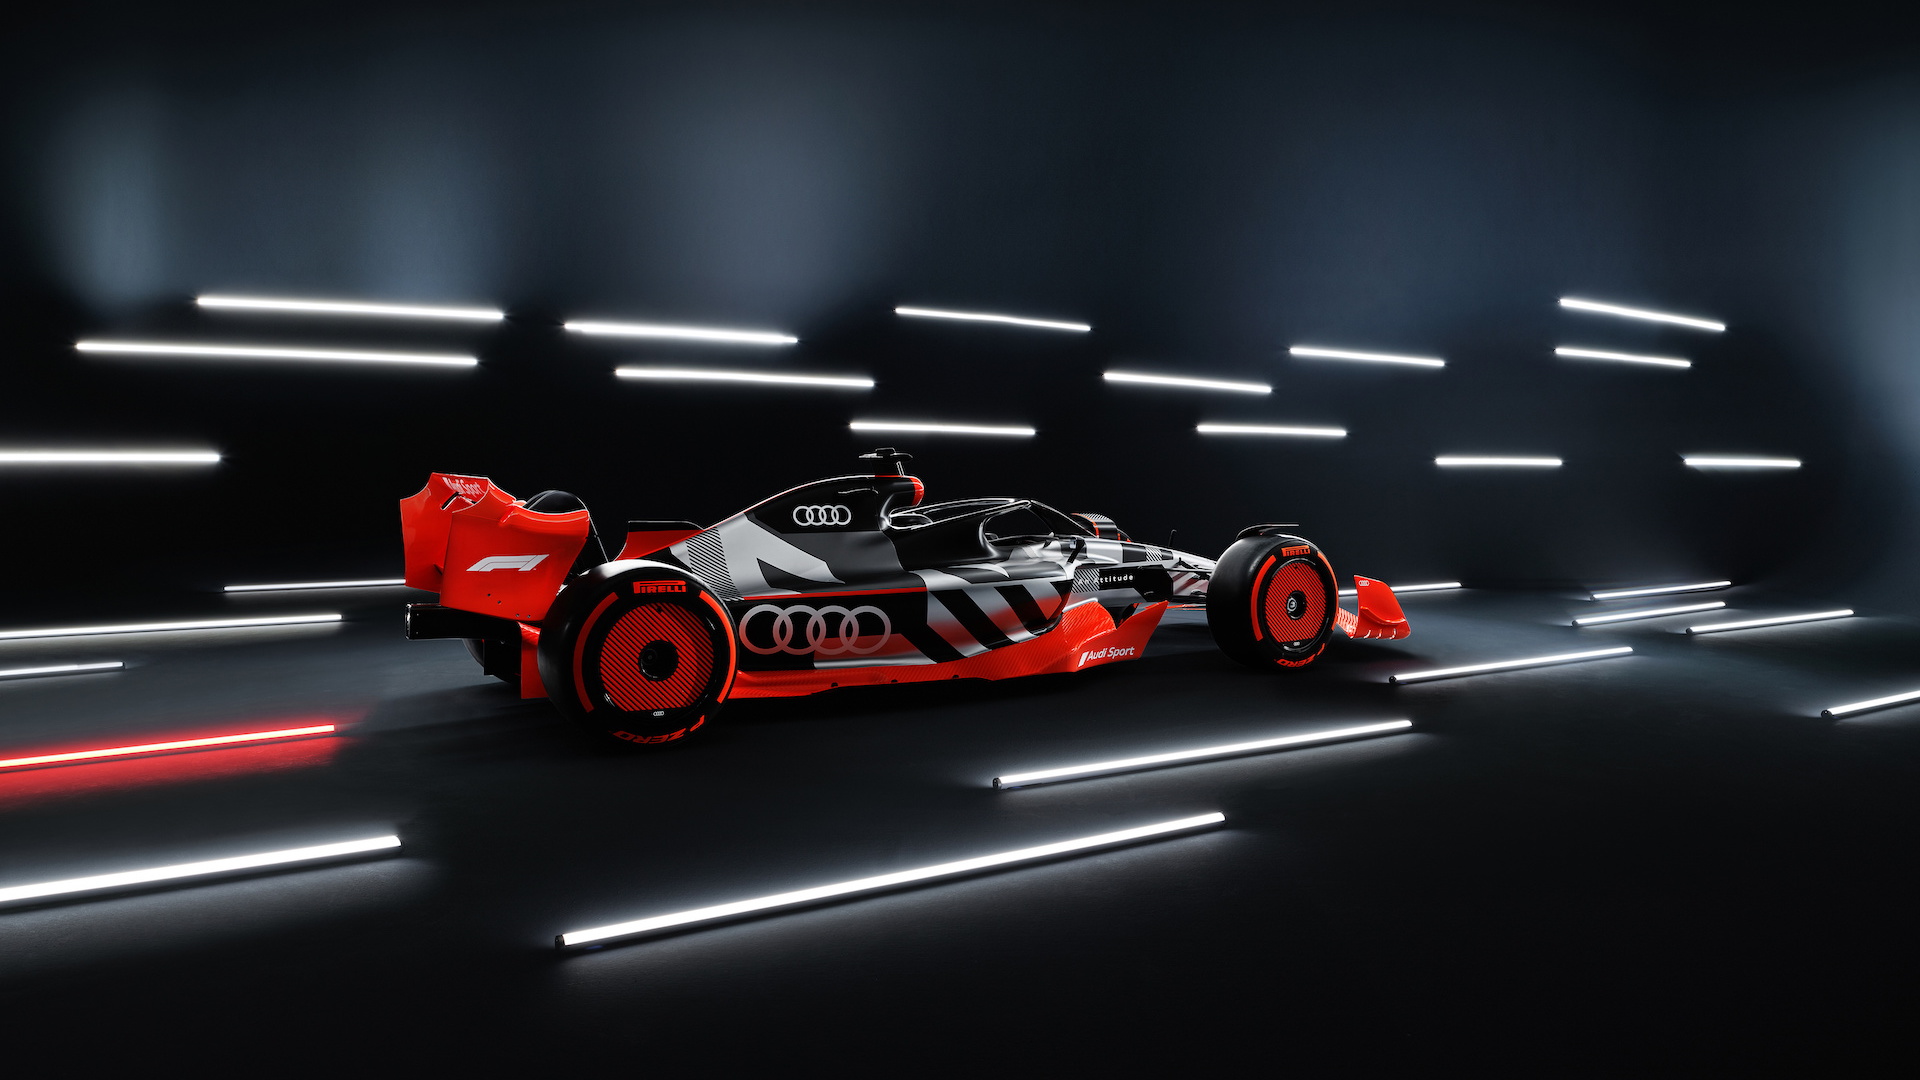 Audi F1 show car for F1 2026 announcement